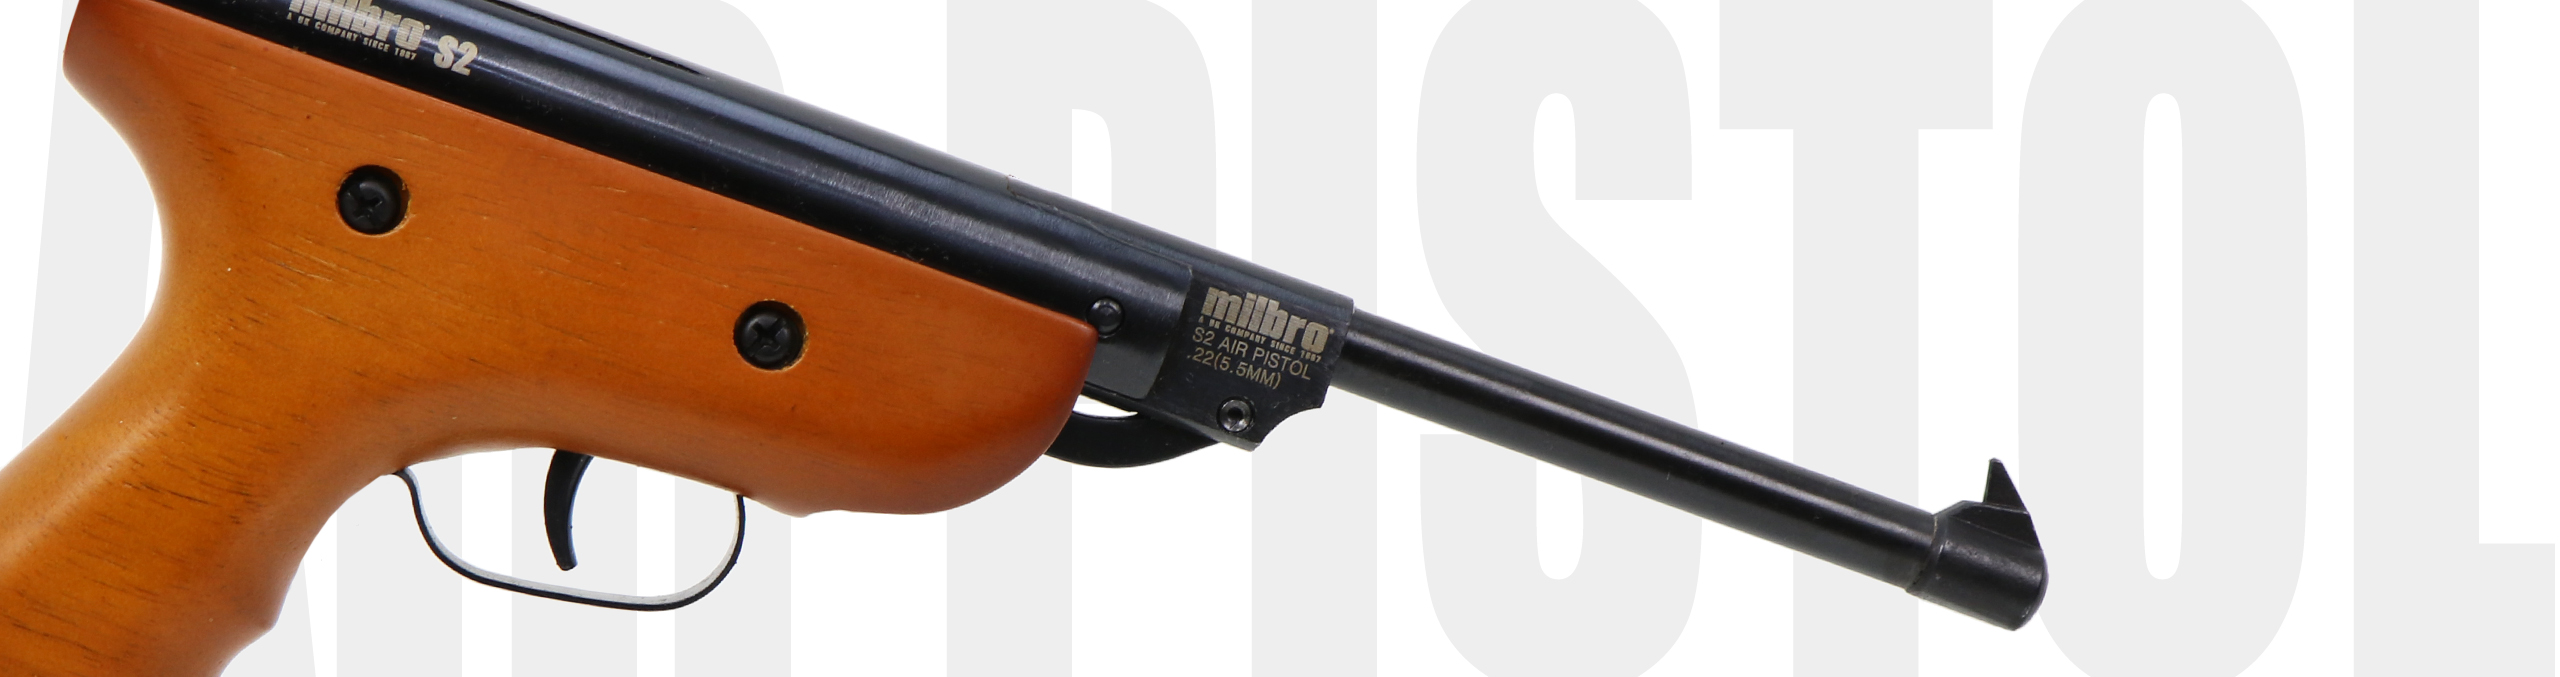 Milbro S3 Air Pistol .22 Wood Air Pistol